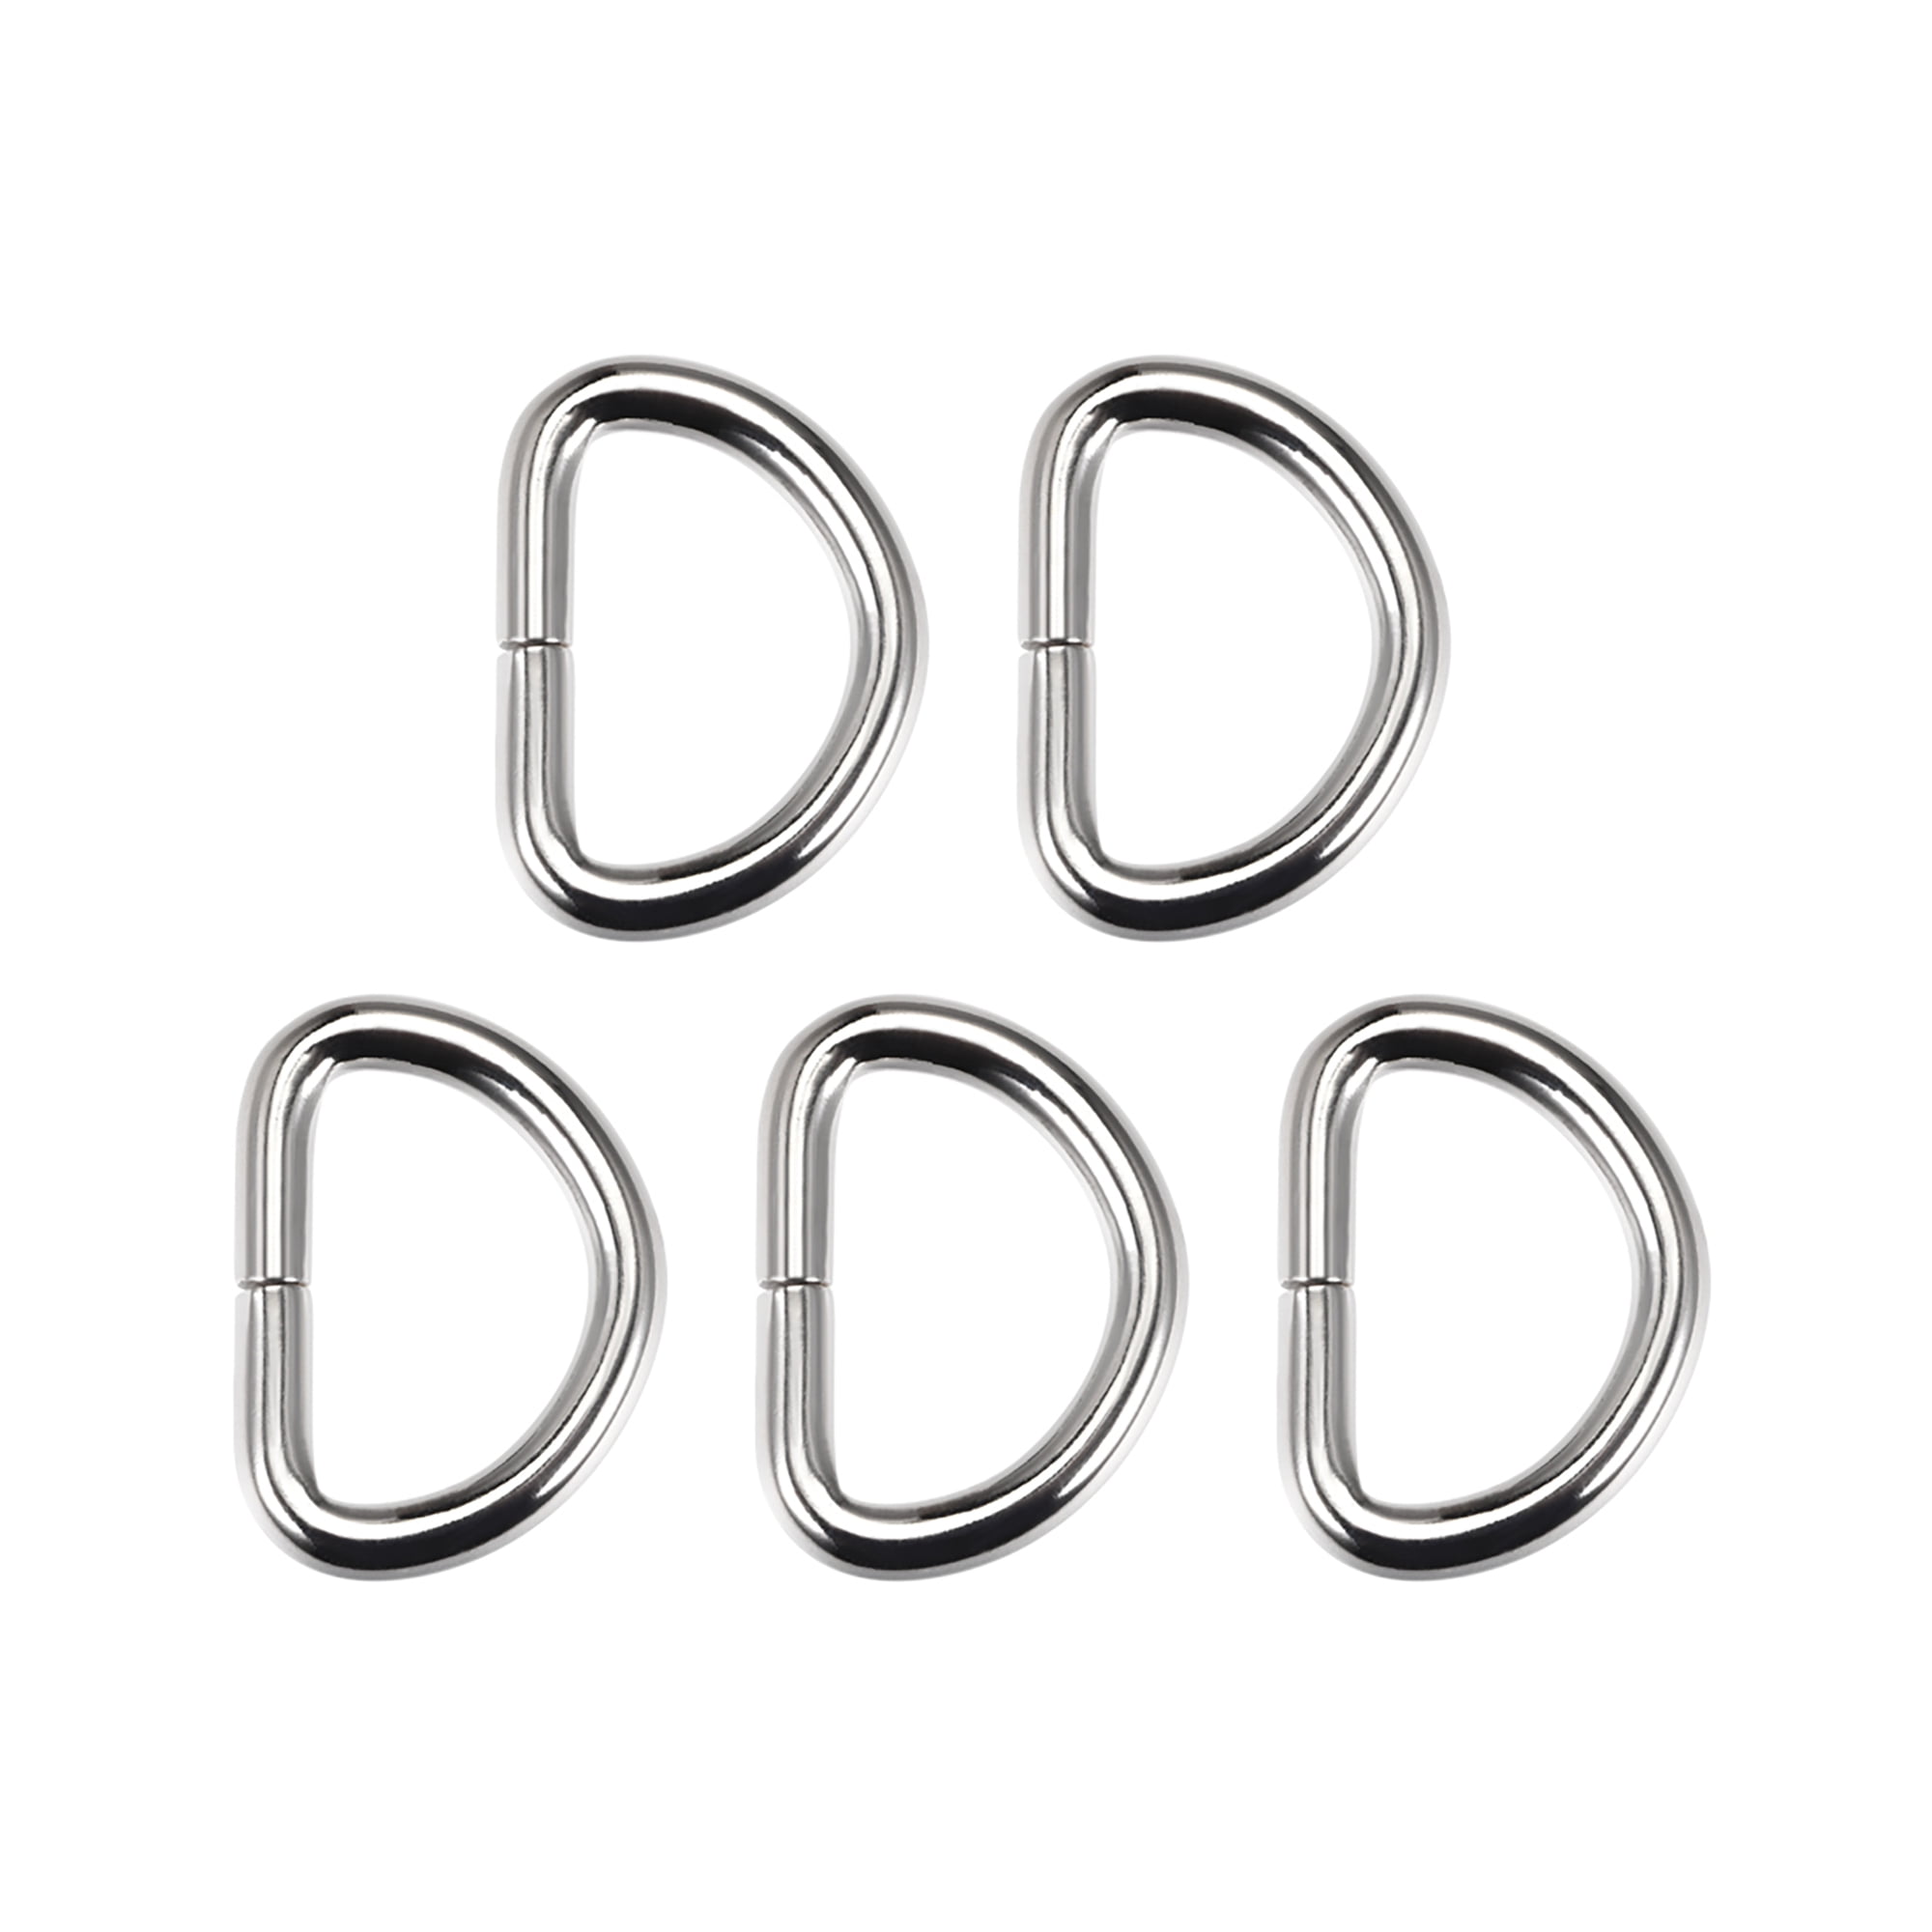 5 Pcs D Ring Buckle 1 Inch Metal Semi-Circular D-Ring Silver Tone for ...